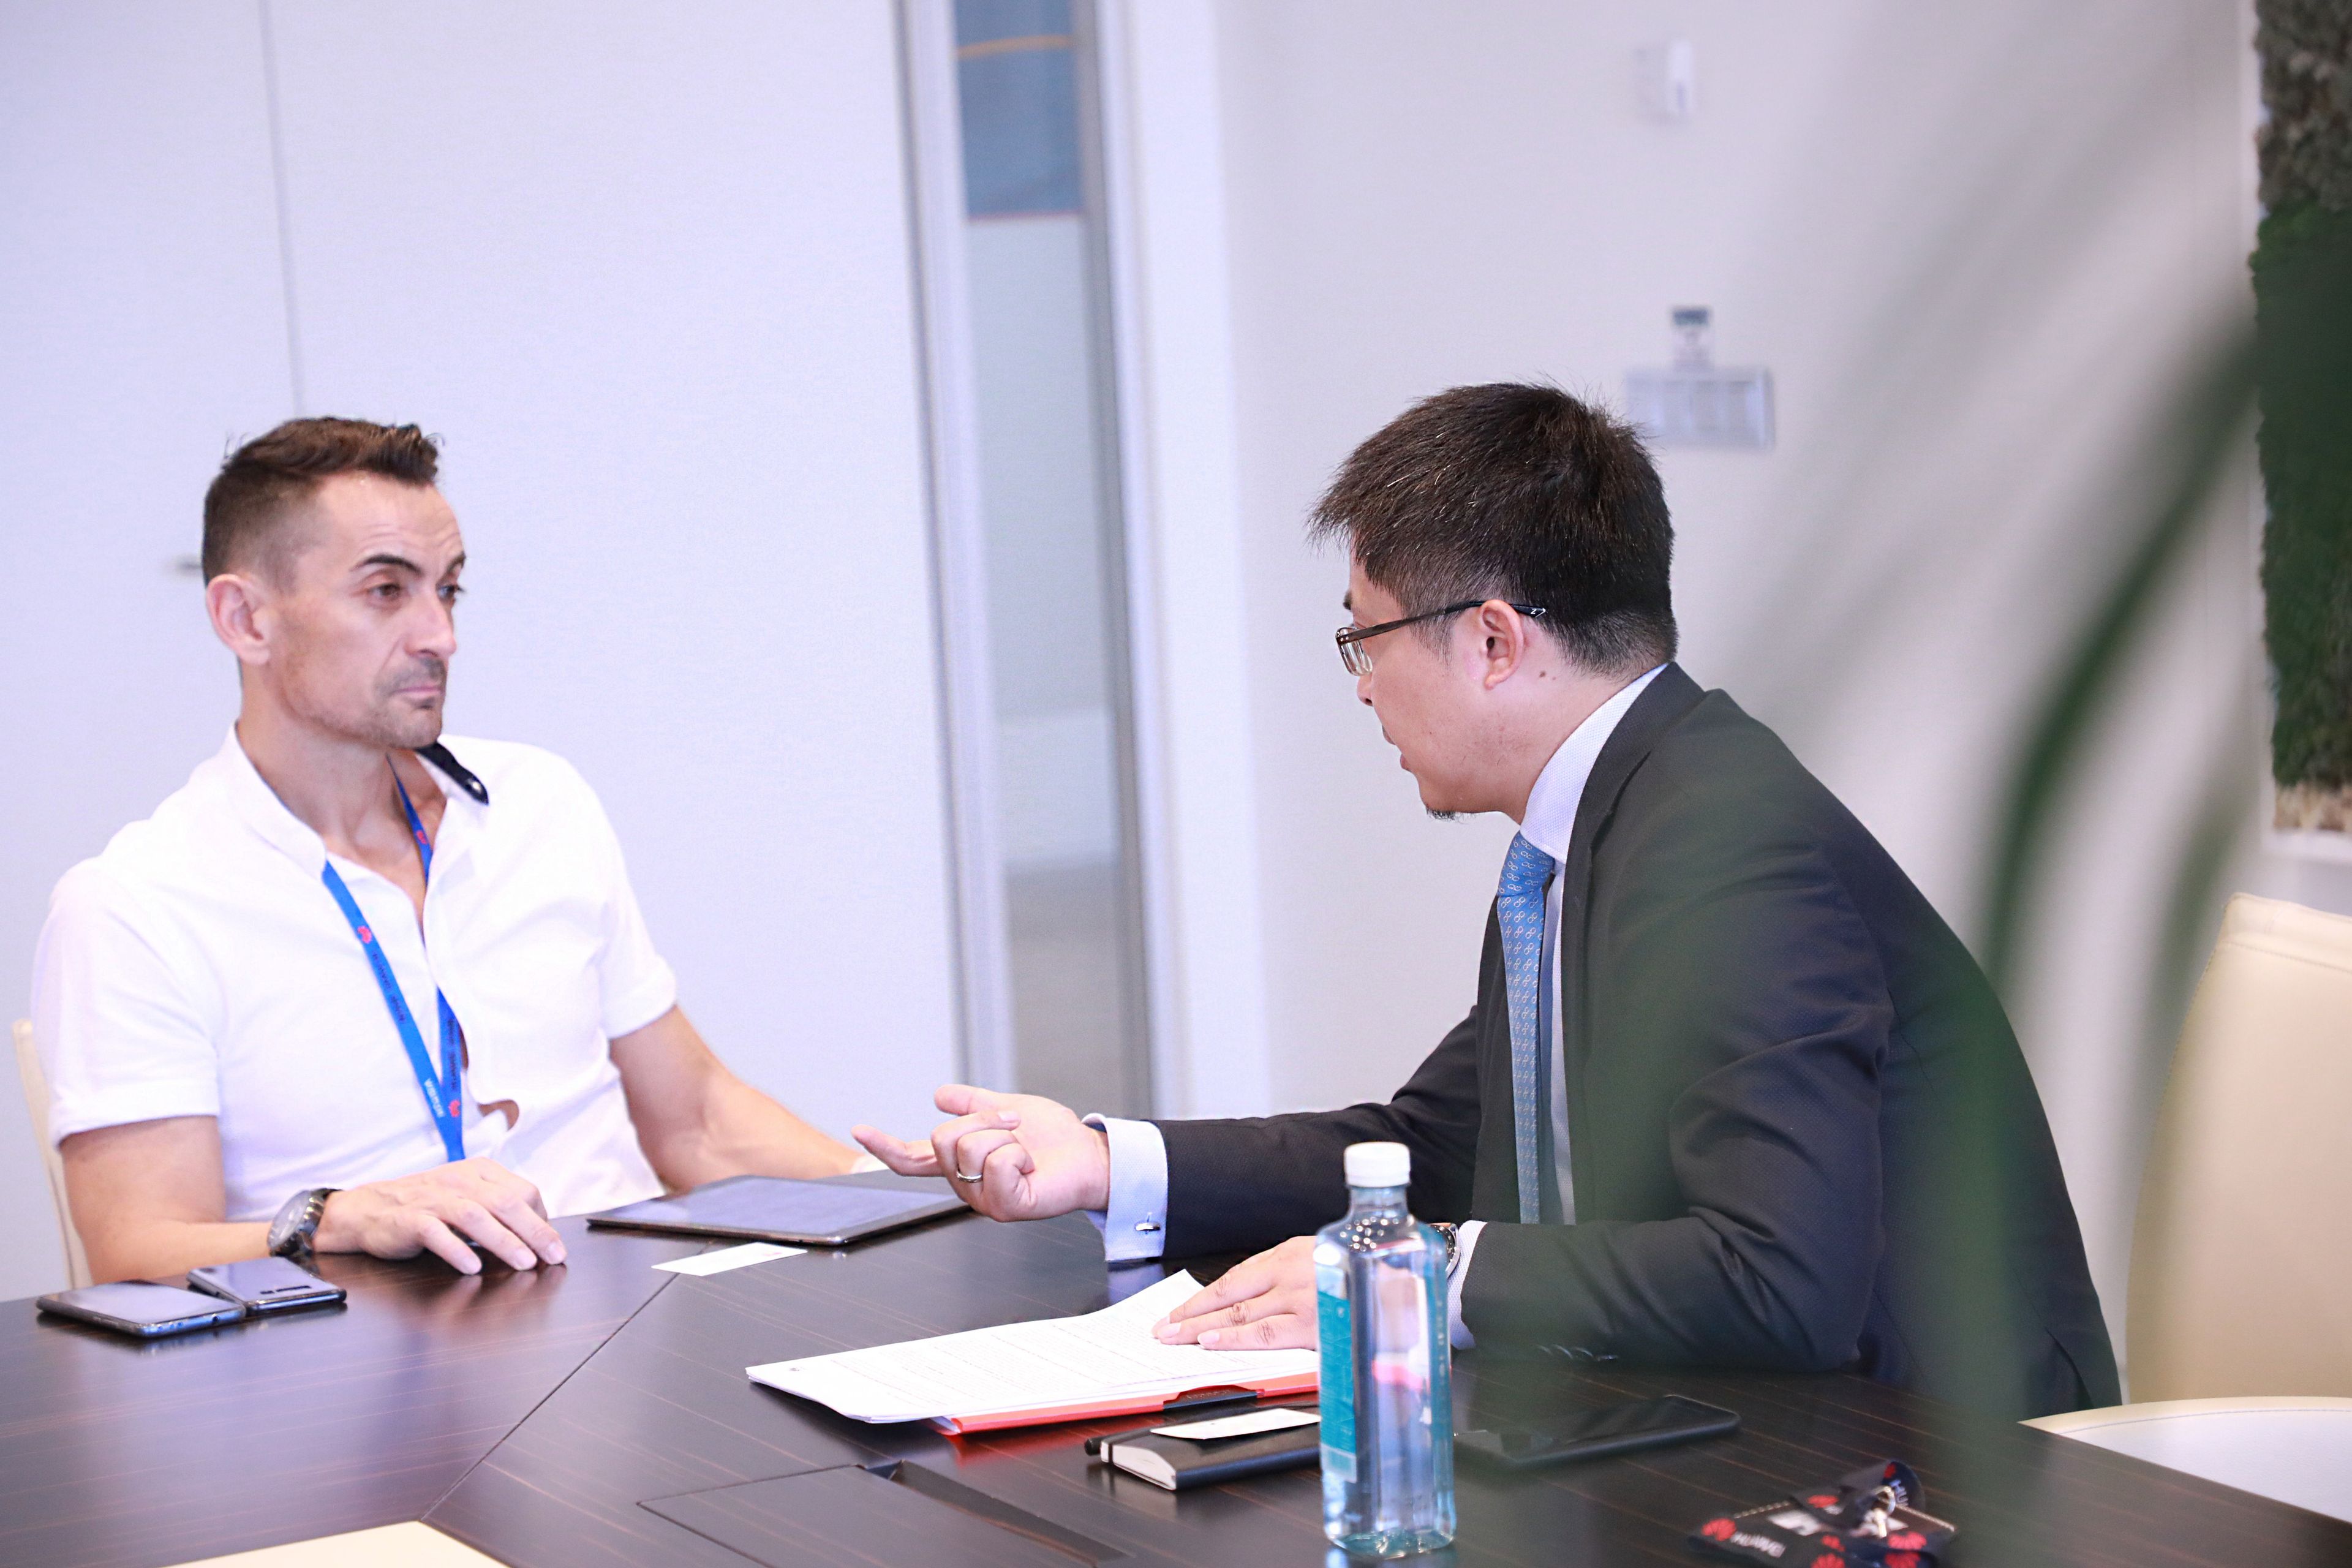 Manuel del Campo, CEO de Axel Springer España (izq) y Tony Jin Yong, CEO de Huawei en España (dcha)